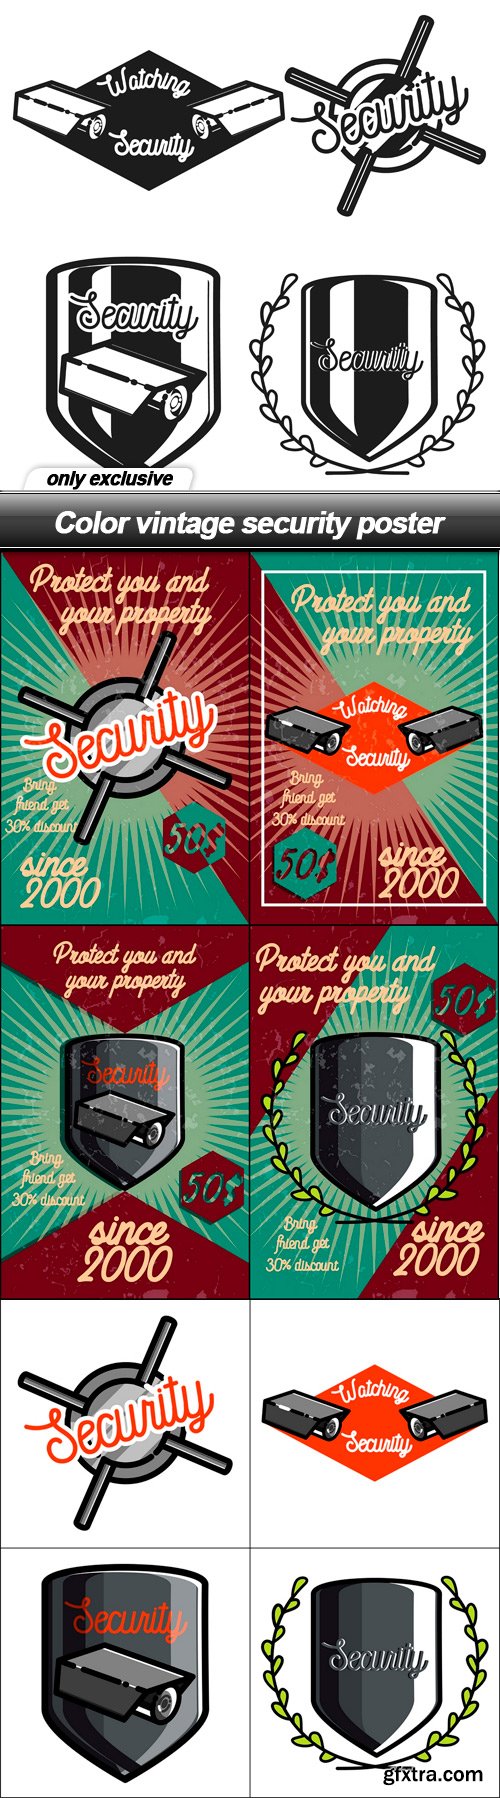 Color vintage security poster - 9 EPS